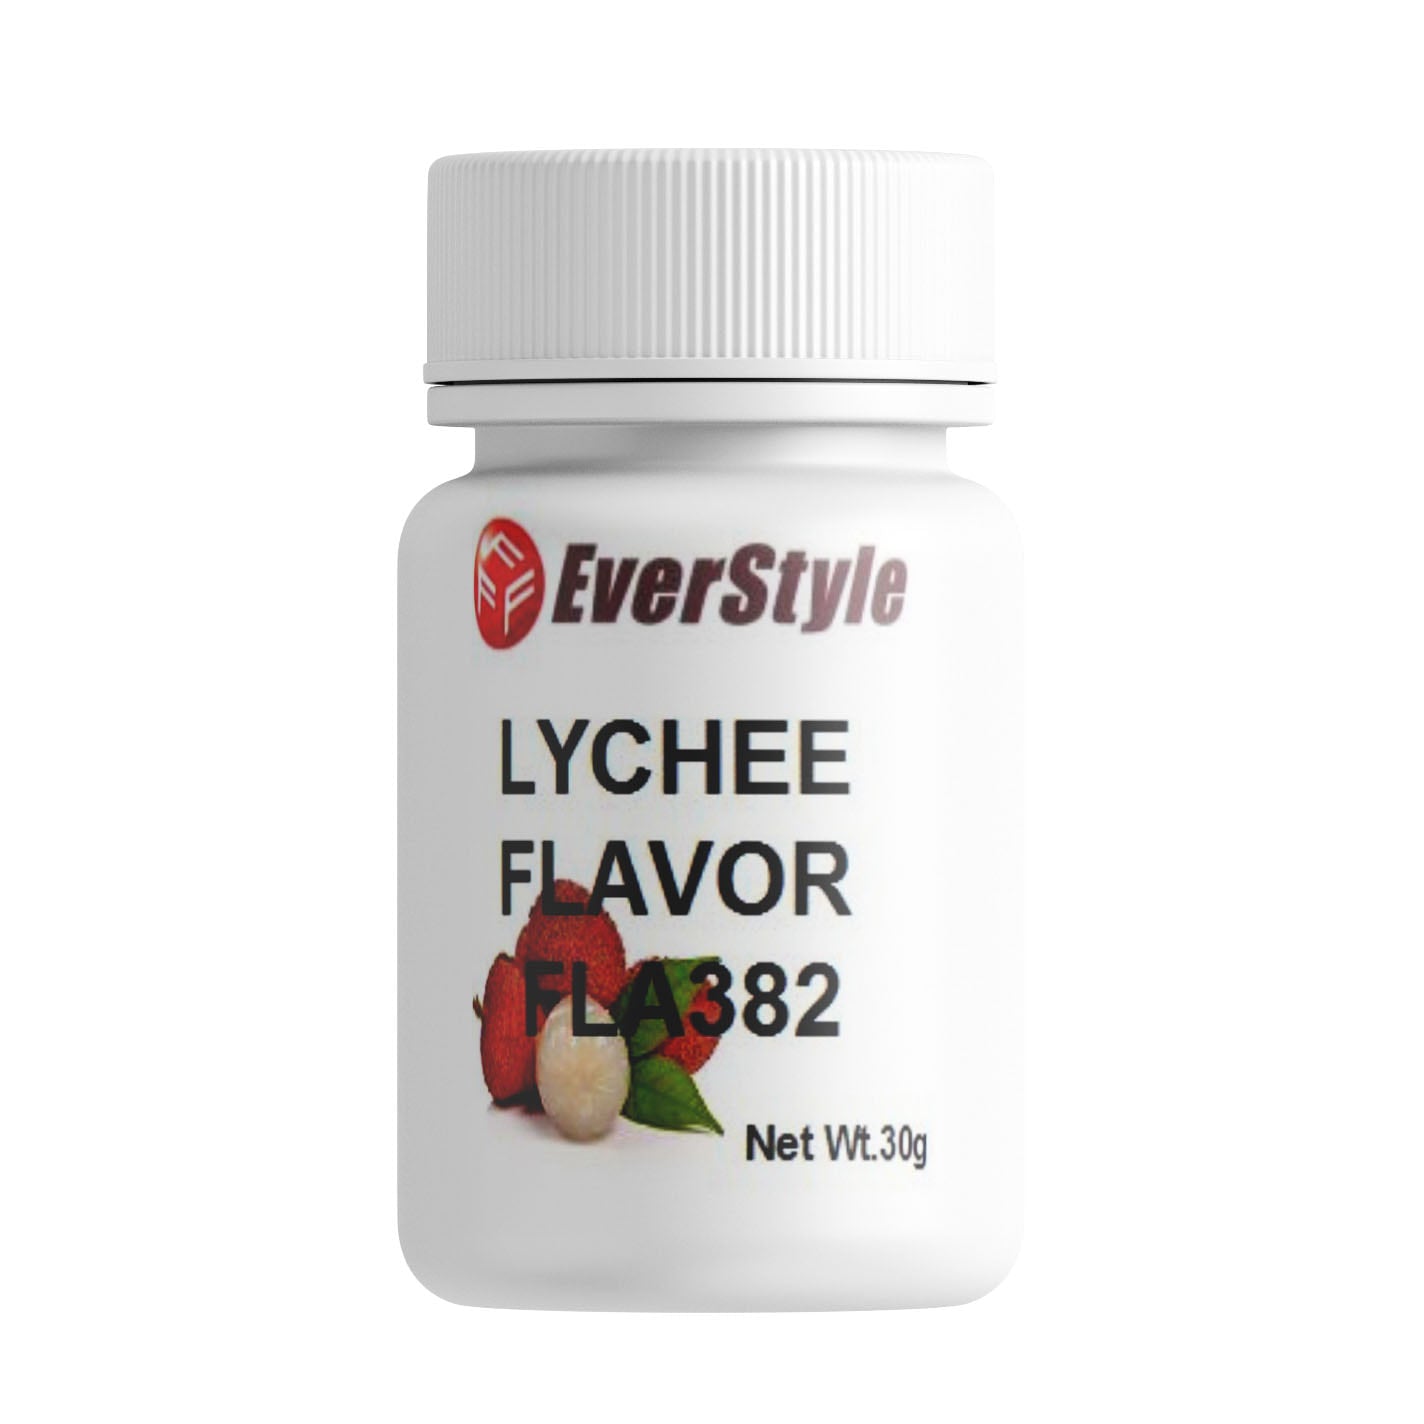 Everstyle Lychee Flavor 30g (FLA382)